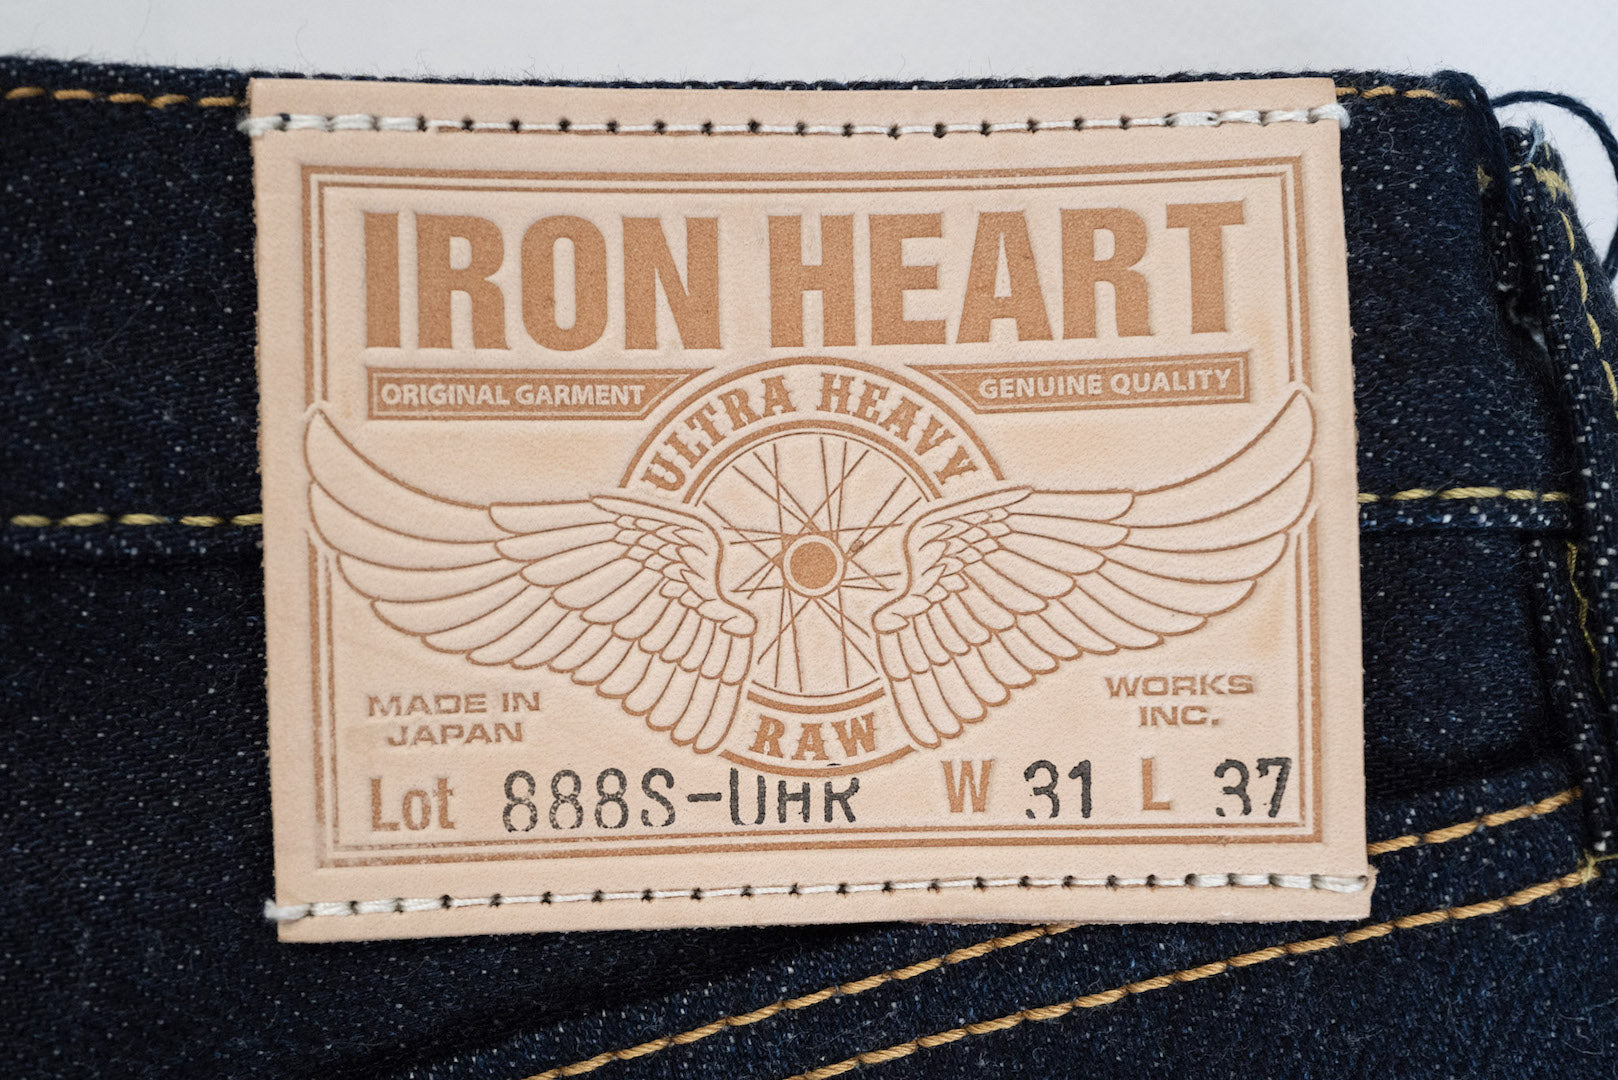 Iron Heart 888S-UHR 21/23oz Denim (Straight Tapered Fit)